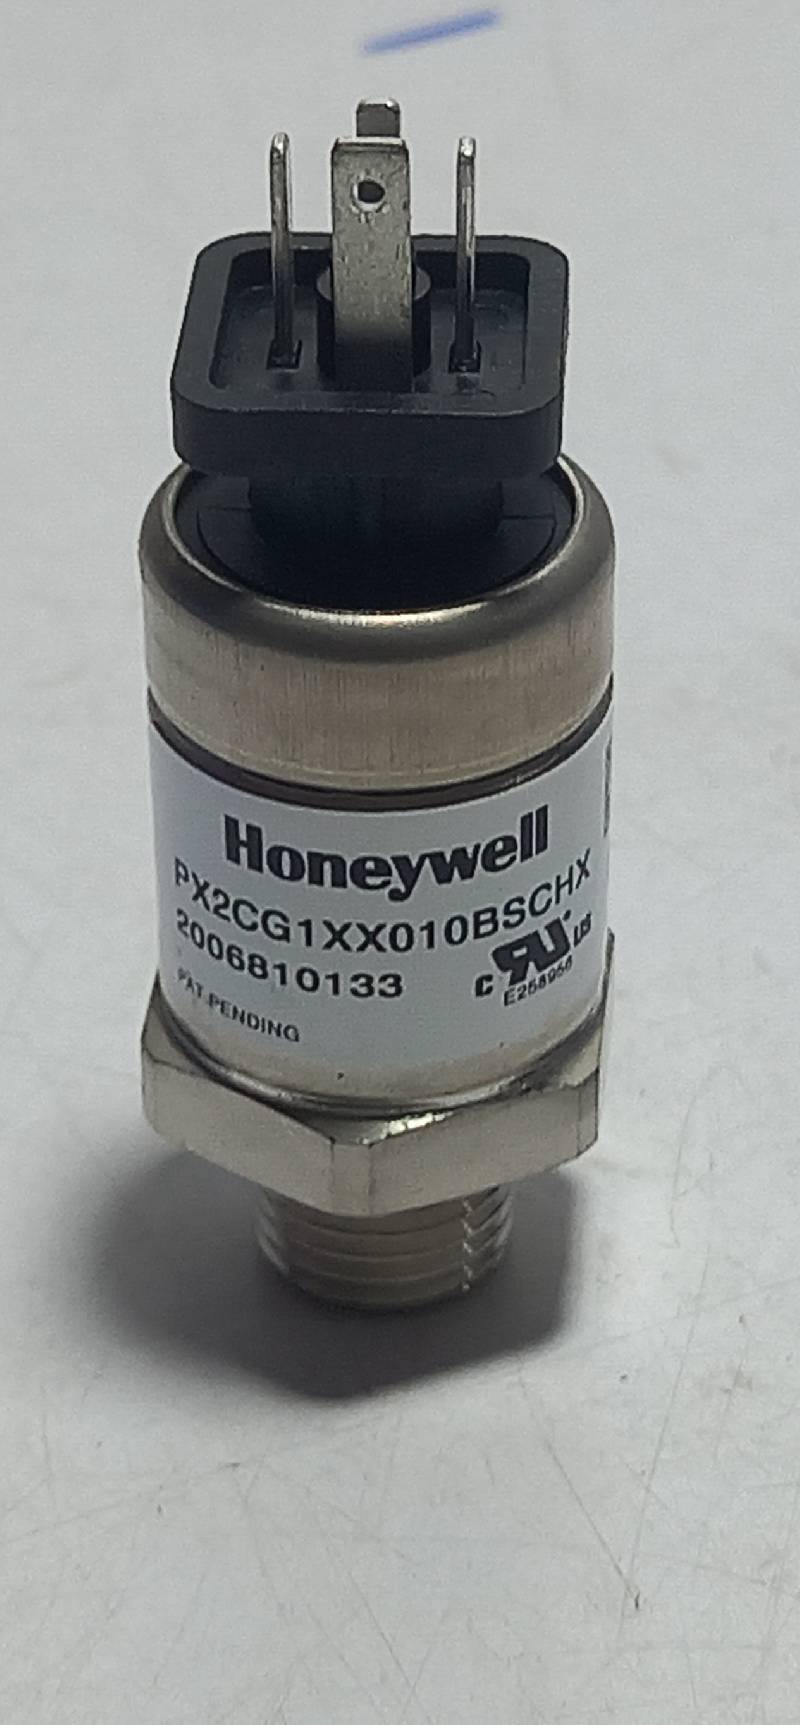 Honeywell PX2CG1XX010BSCHX  Pressure Transducer